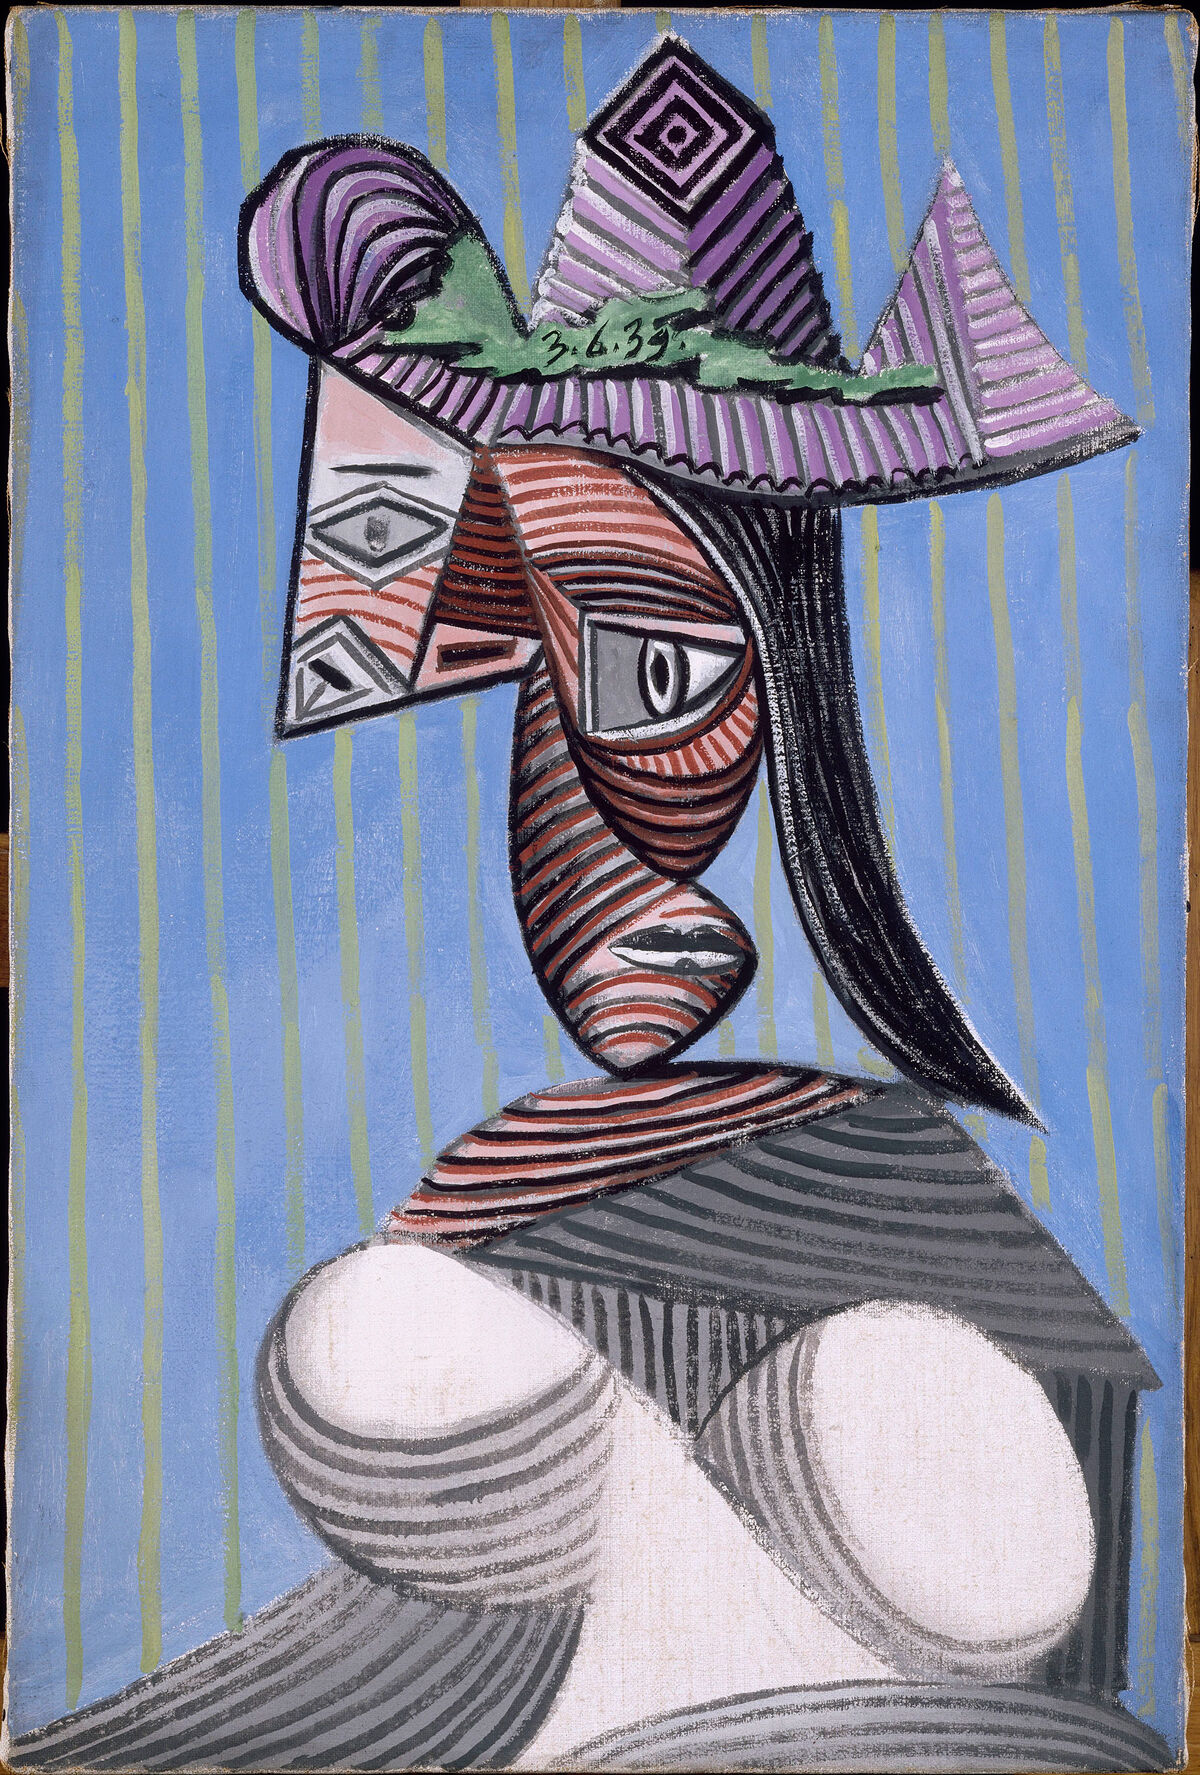 Picasso, Busto de mujer con sombrero de rayas, 1939. Musée Picasso Paris. © Sucesión Picasso. VEGAP, 2017. Courtesy of Museo Nacional Centro de Arte Reina Sofía.